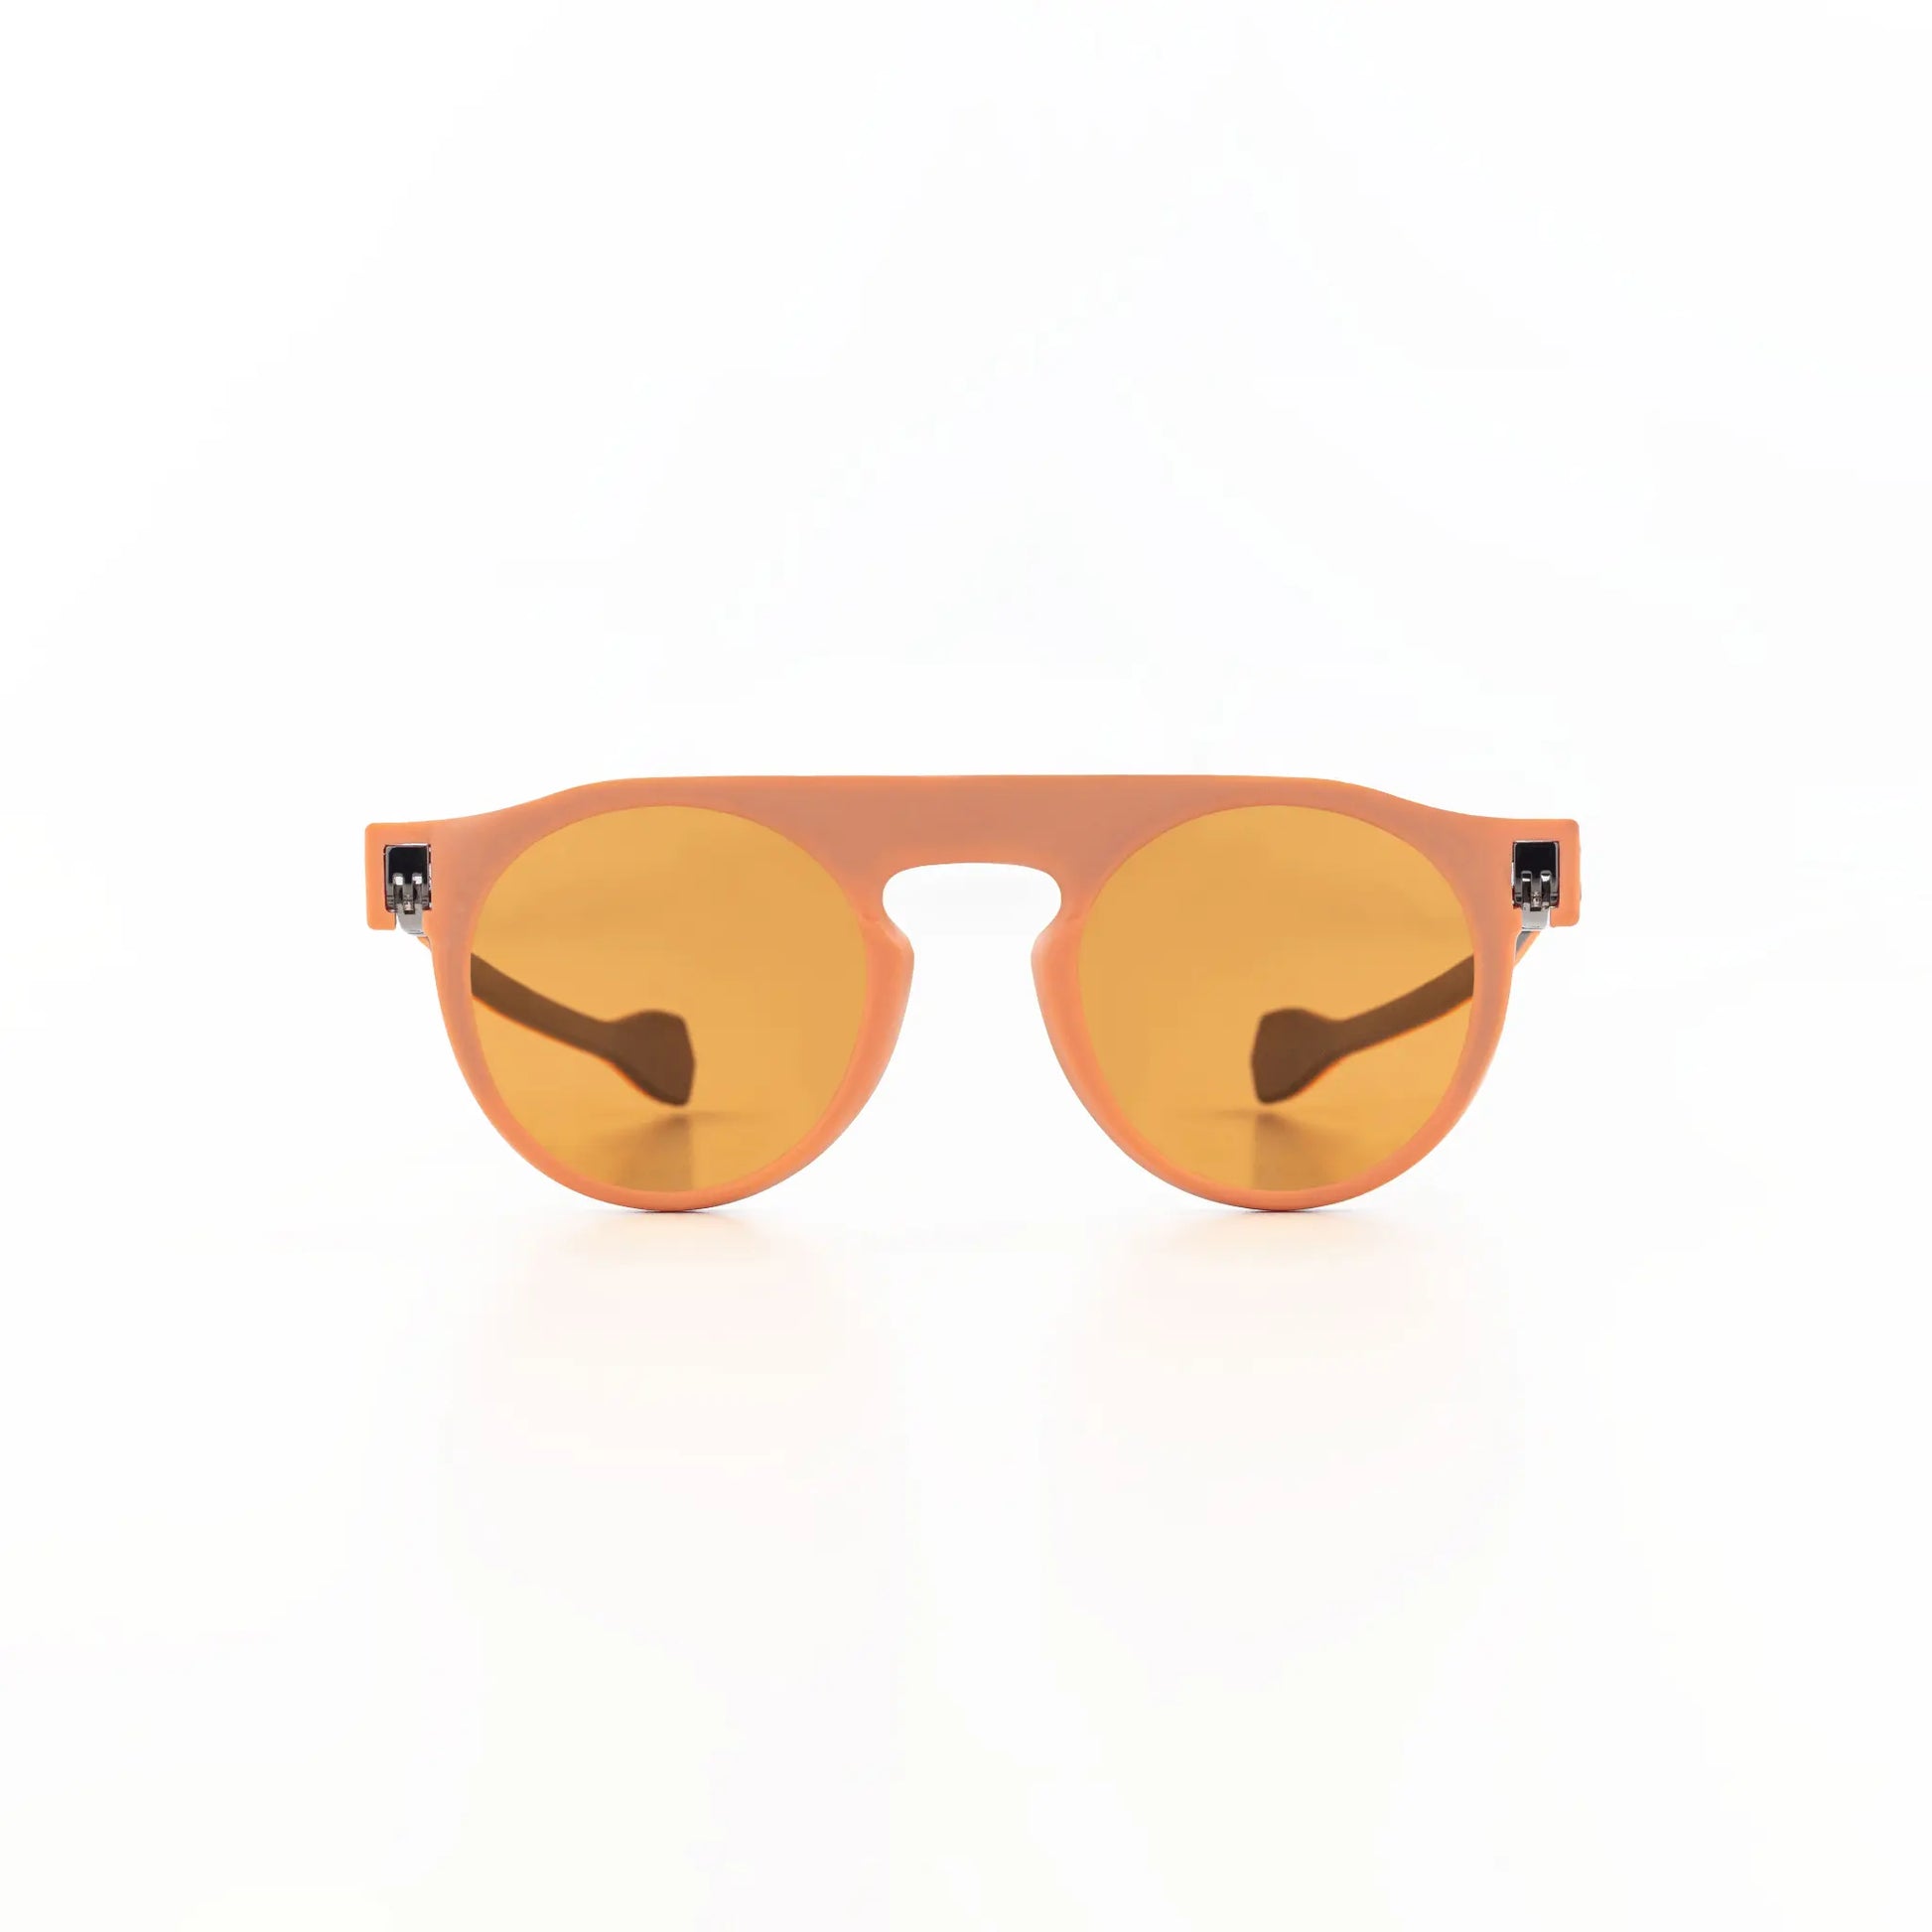 Reverso sunglasses grey & orange reversible & ultra light front view 1